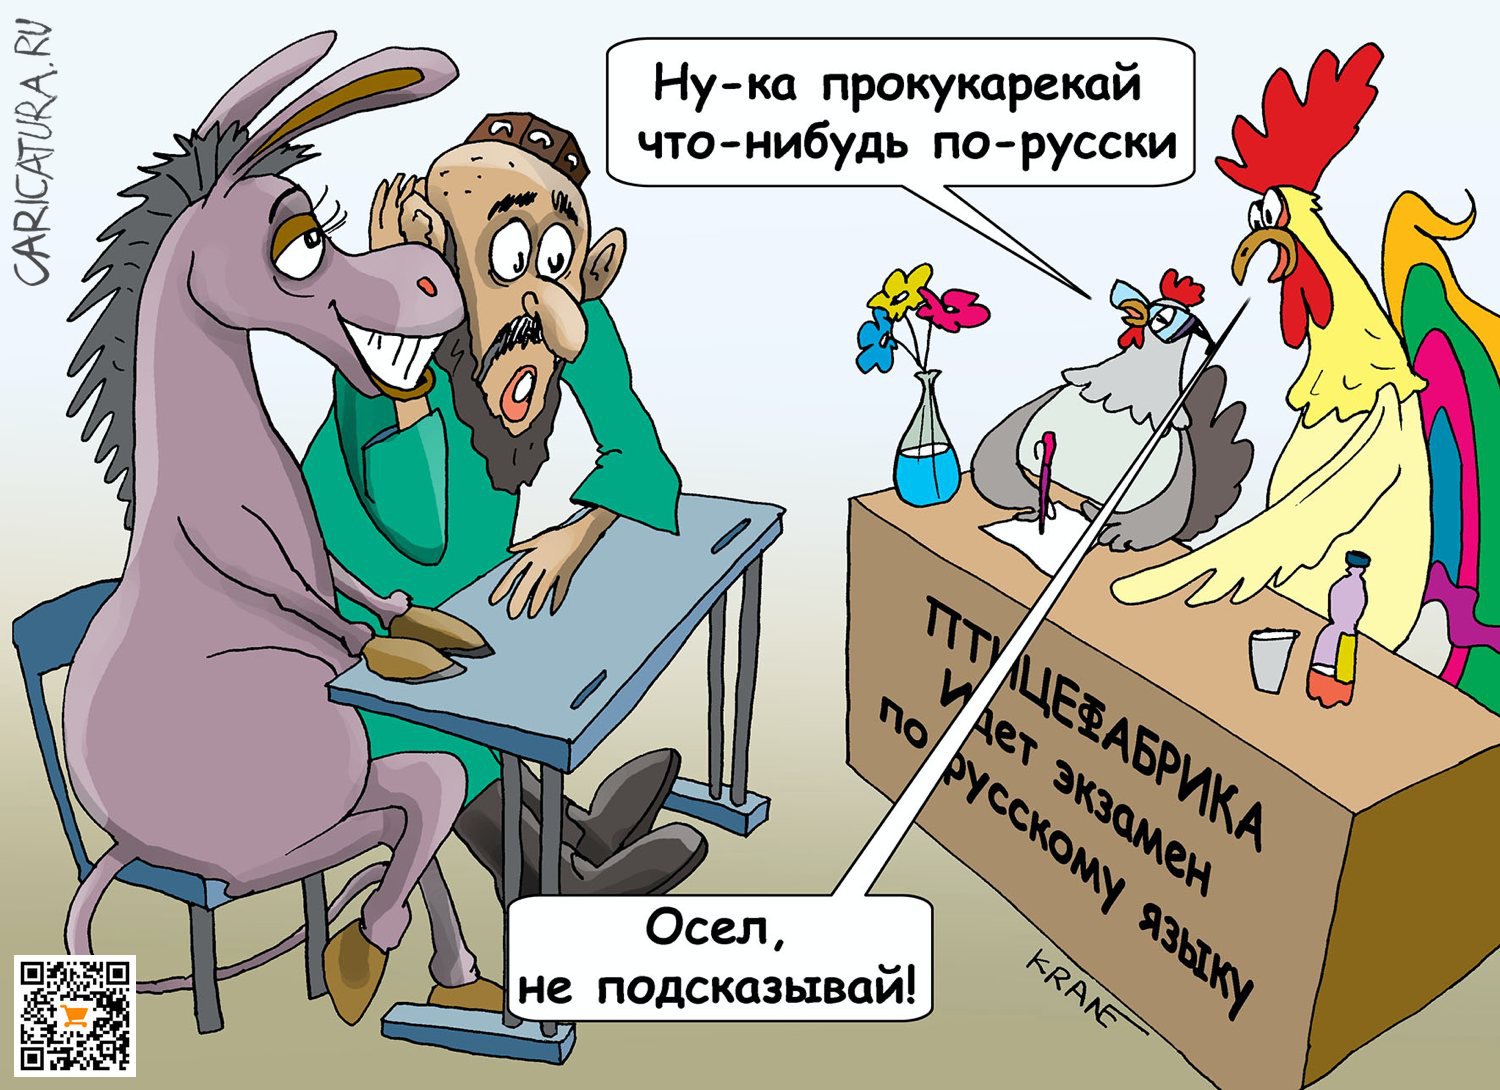 Карикатура "Квота курам на смех", Евгений Кран